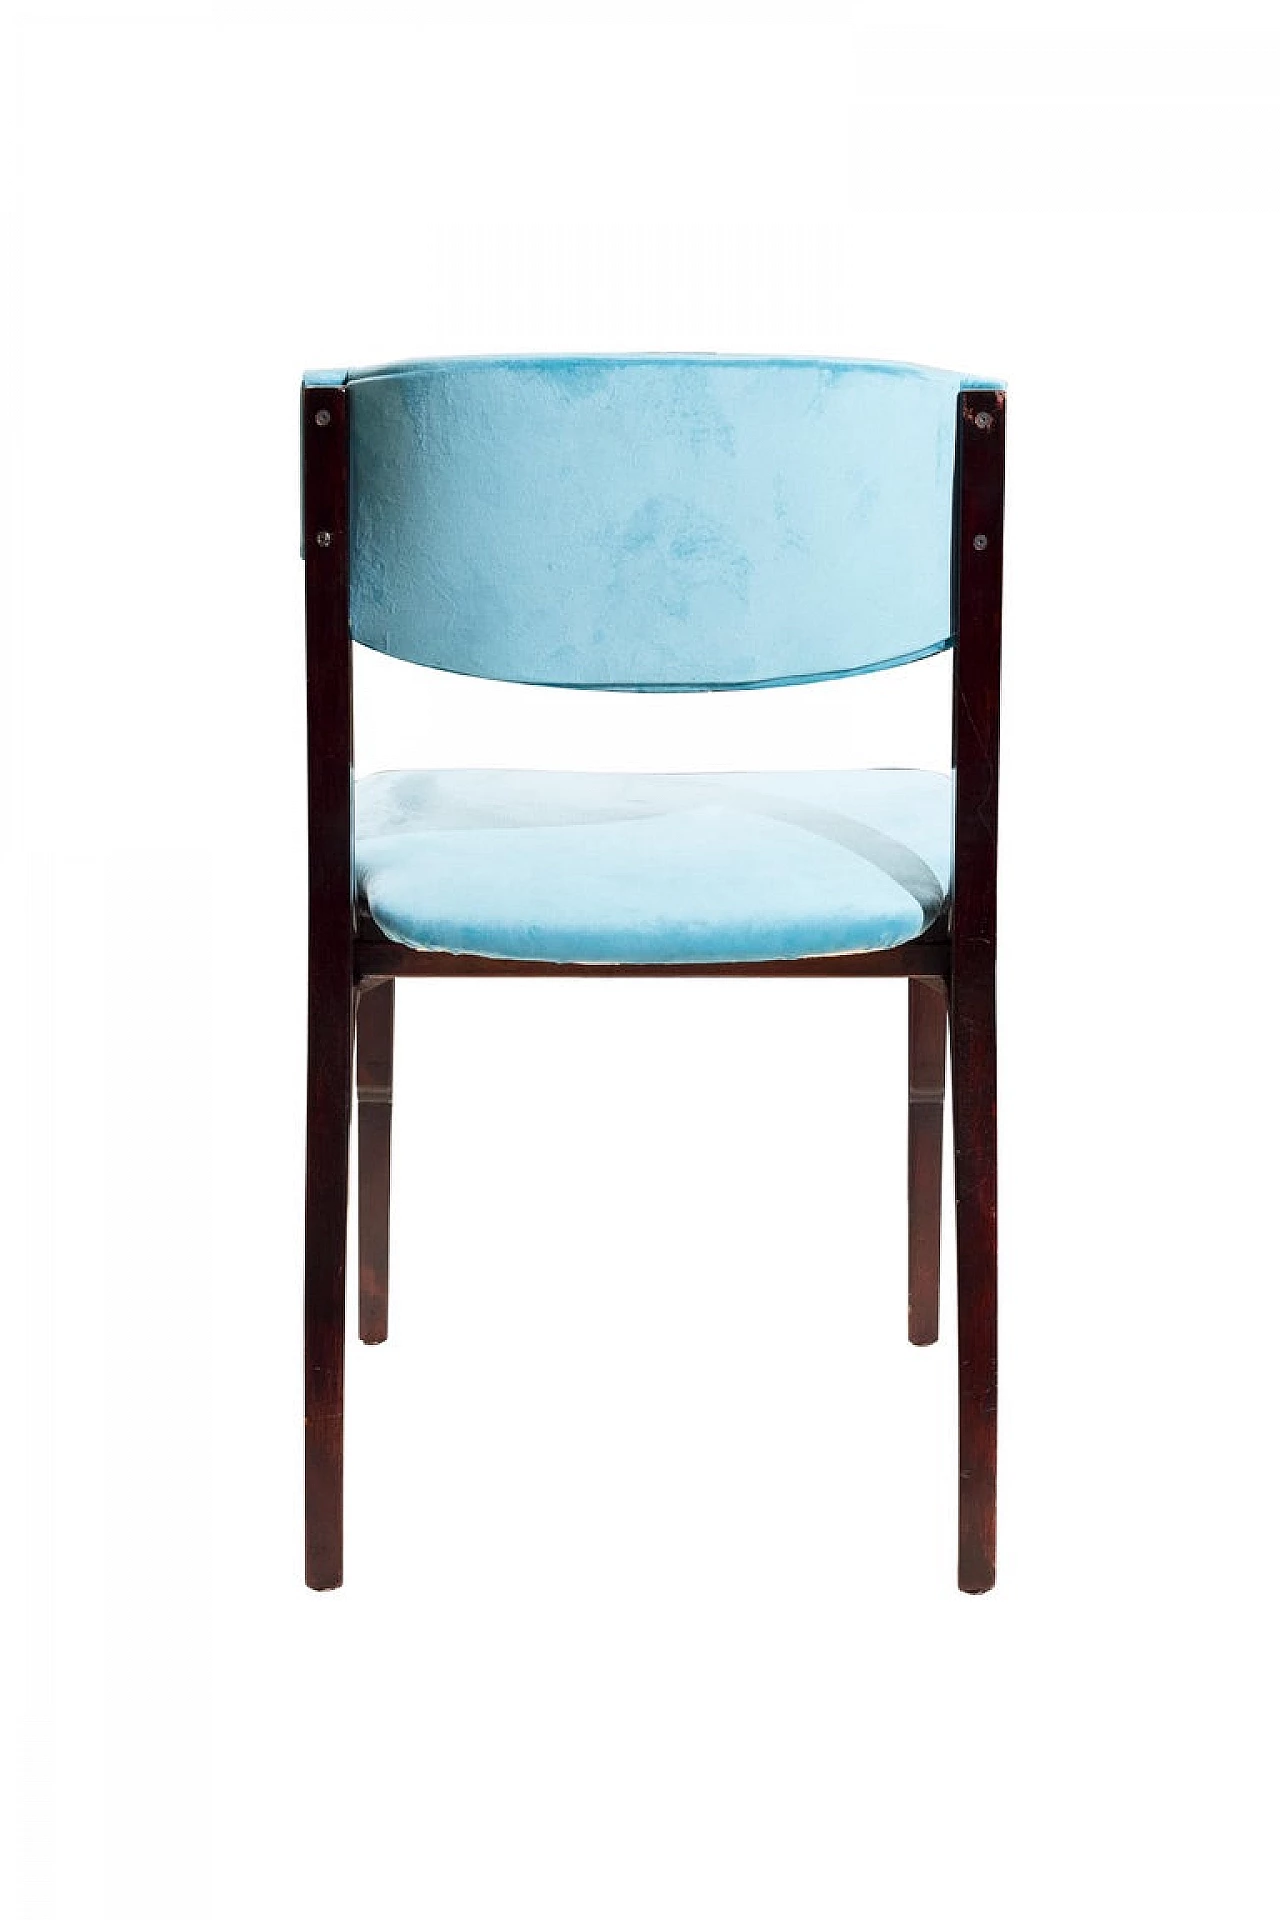 5 Chairs by Gianfranco Frattini for Cantieri Carugati, 1960s 7